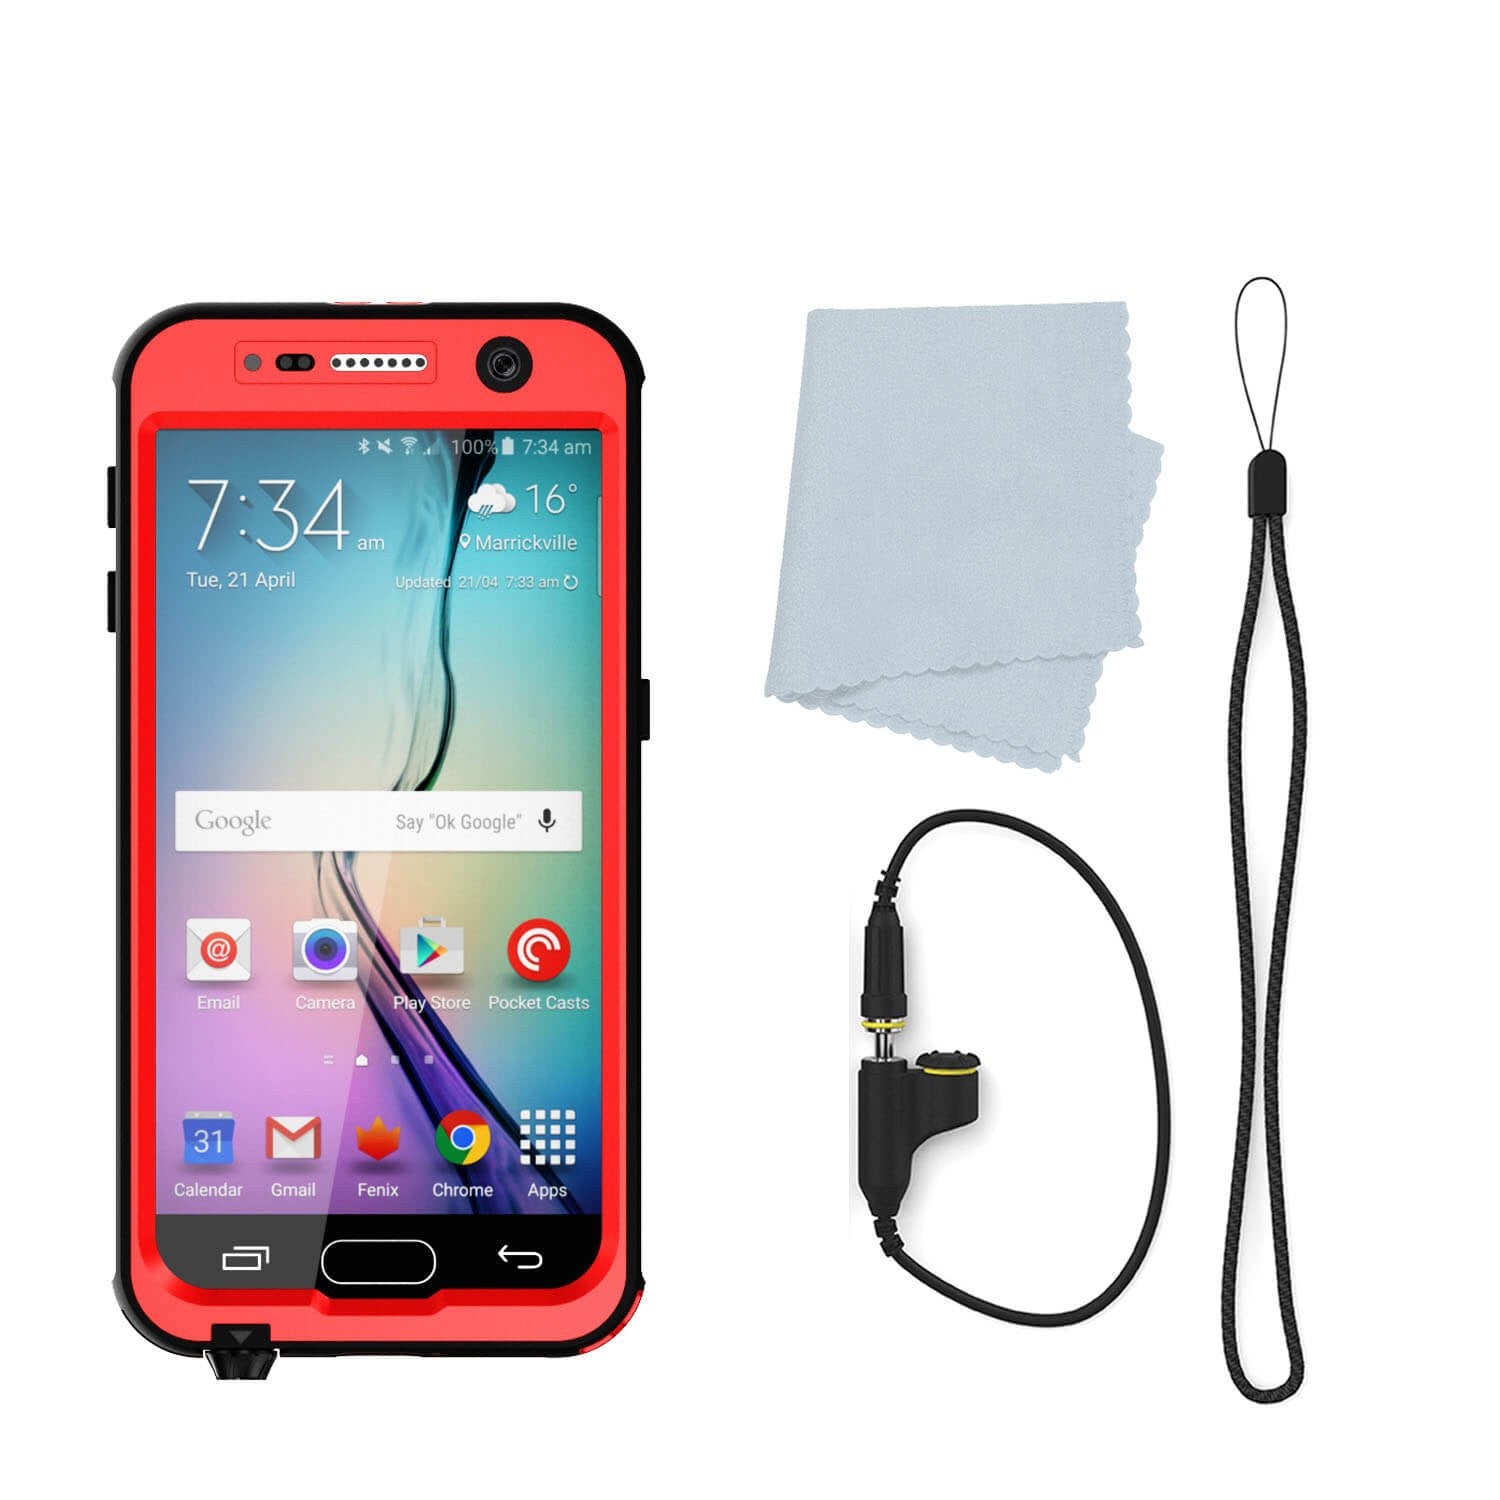 Galaxy S6 Waterproof Case PunkCase StudStar Red Thin 6.6ft Underwater IP68 Shock/Dirt/Snow Proof